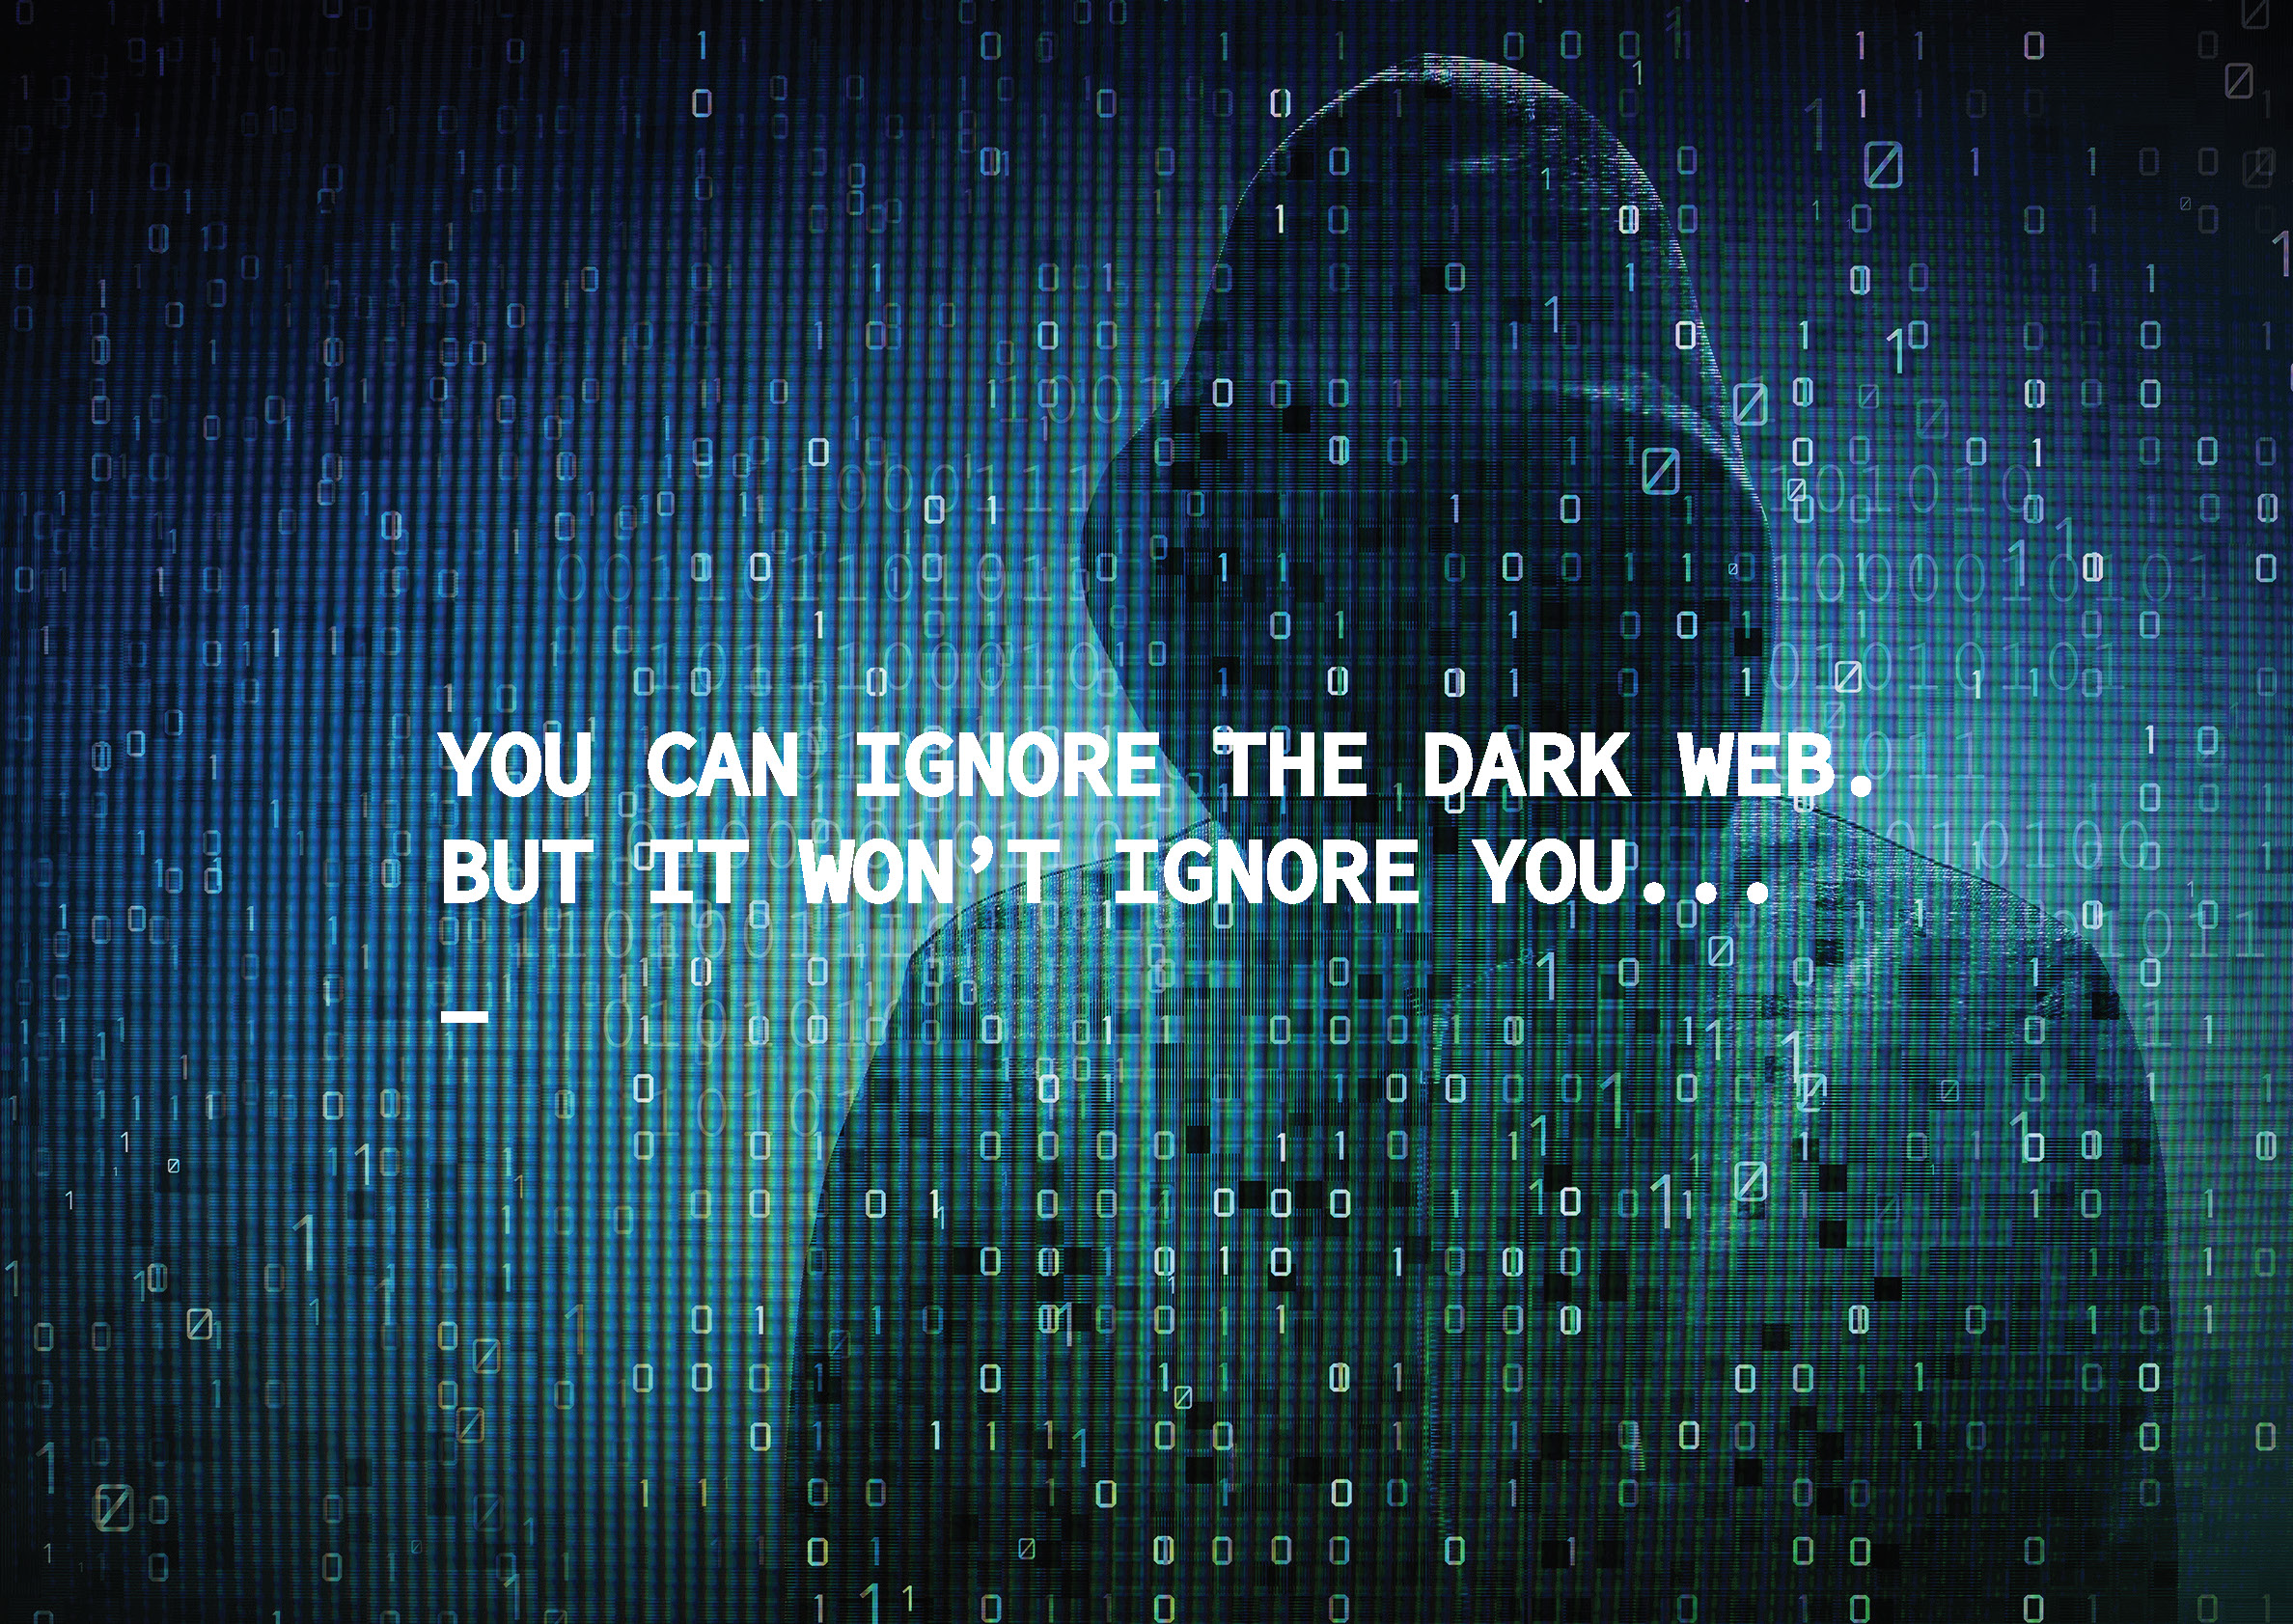 the dark web